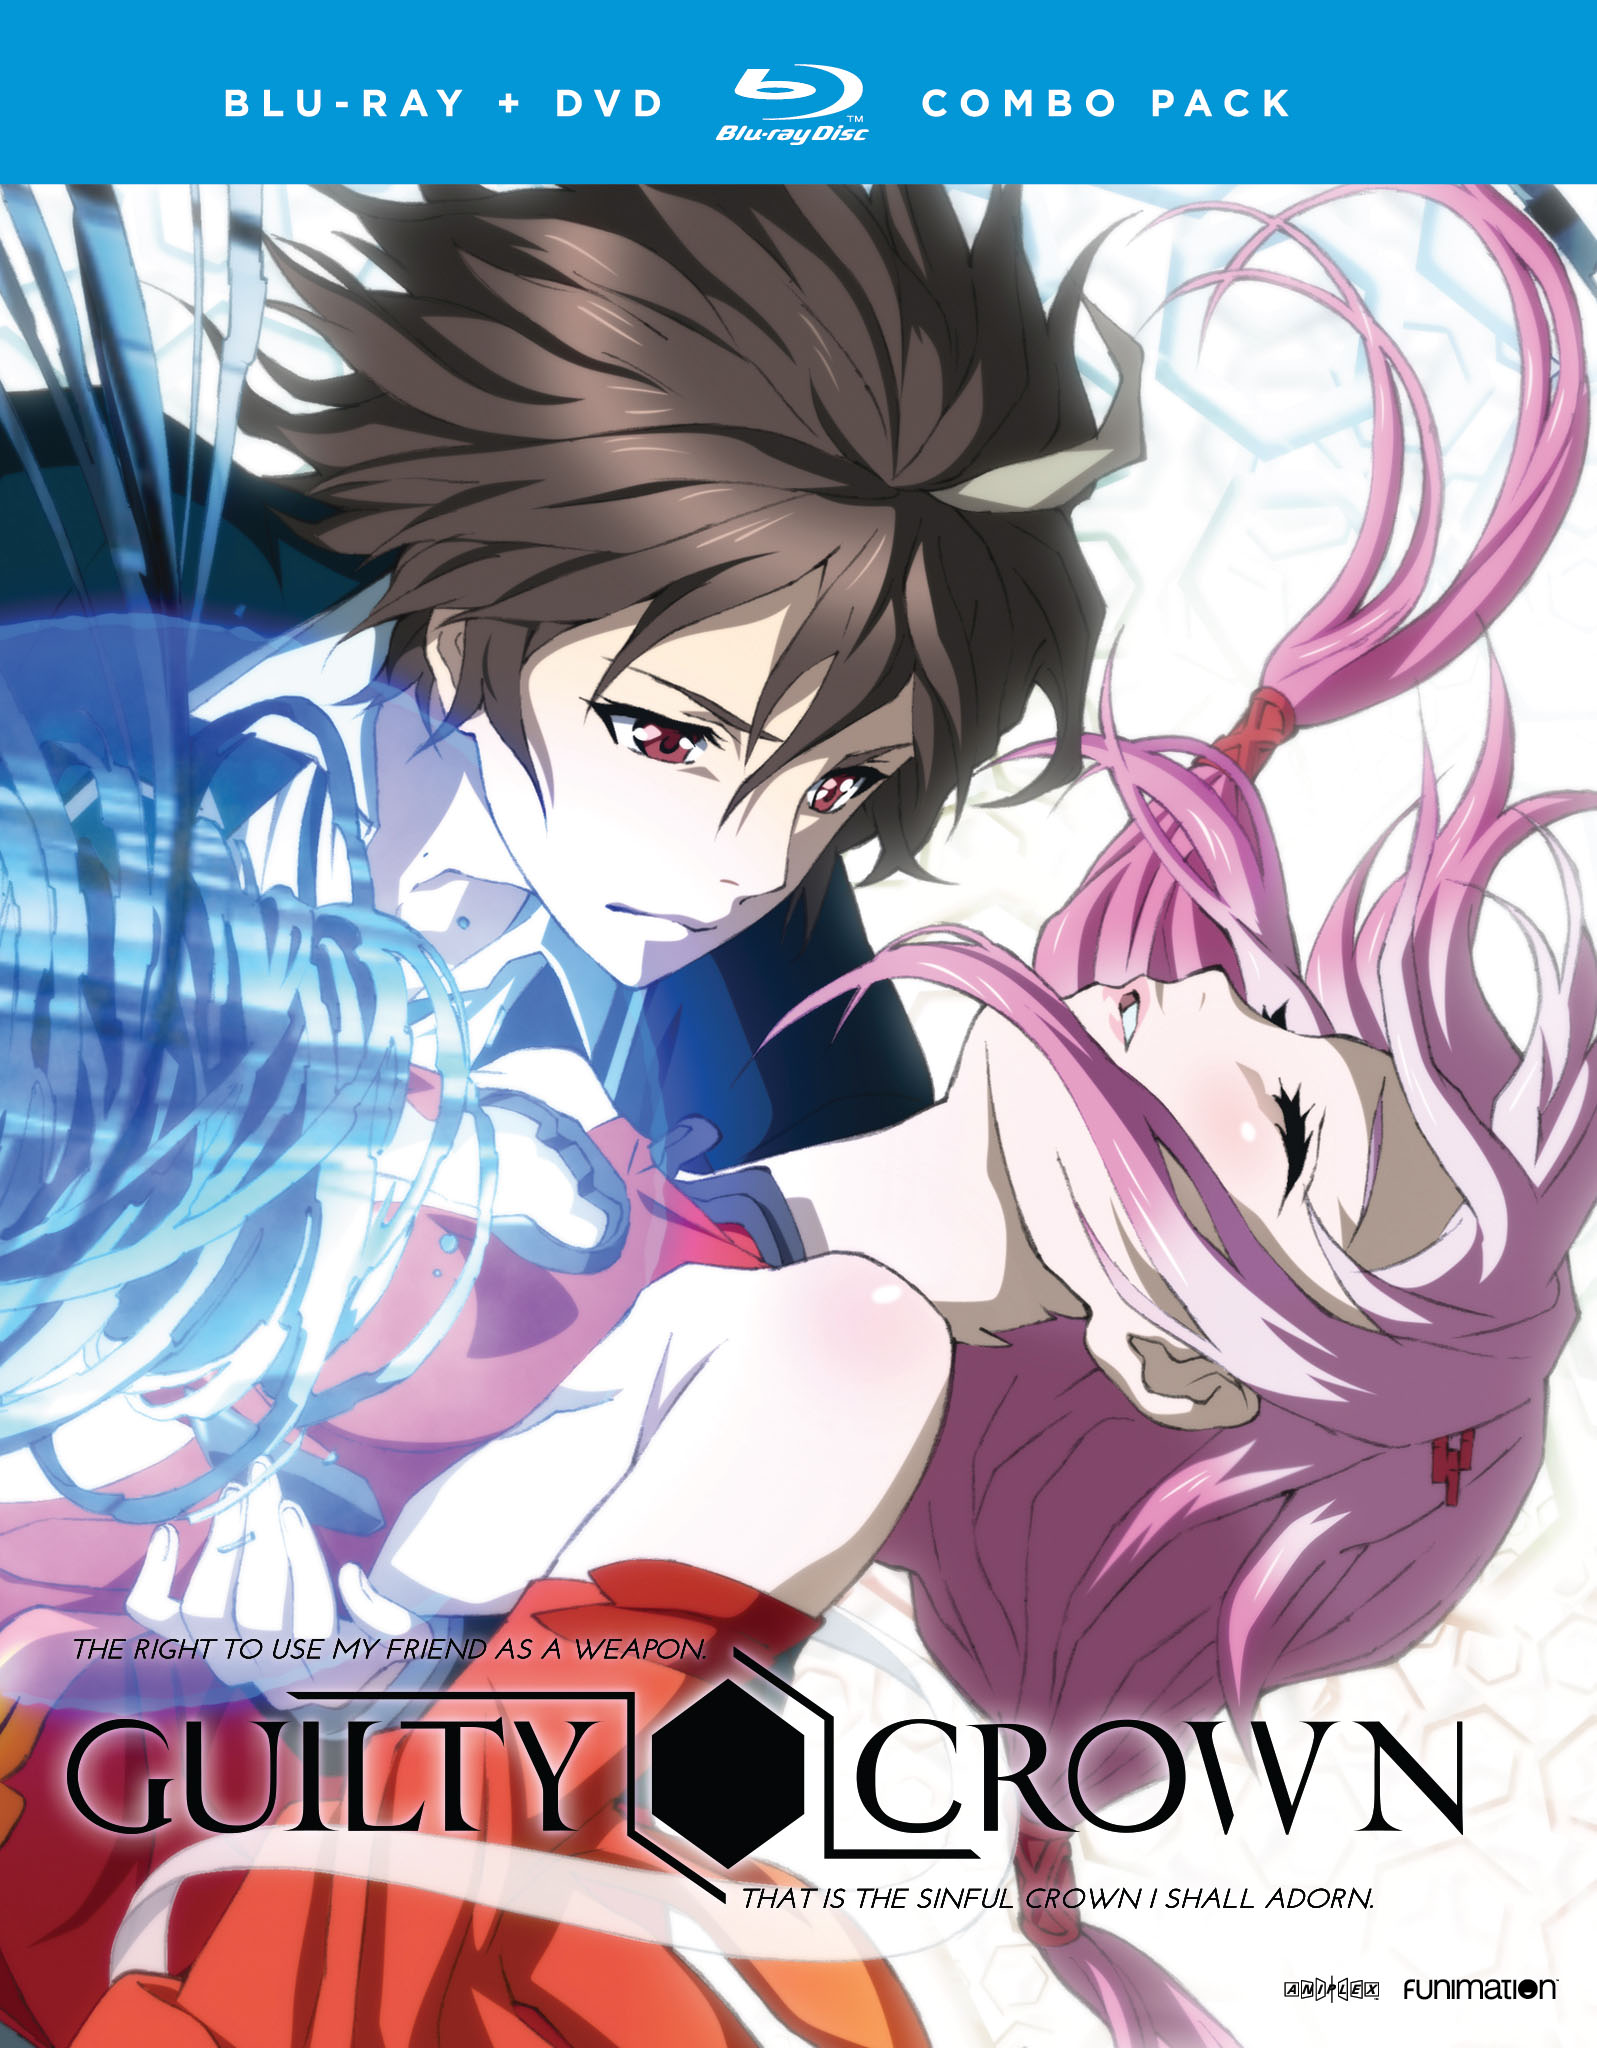 Best Buy: Guilty Crown: The Complete Series [Blu-ray/DVD] [8 Discs]